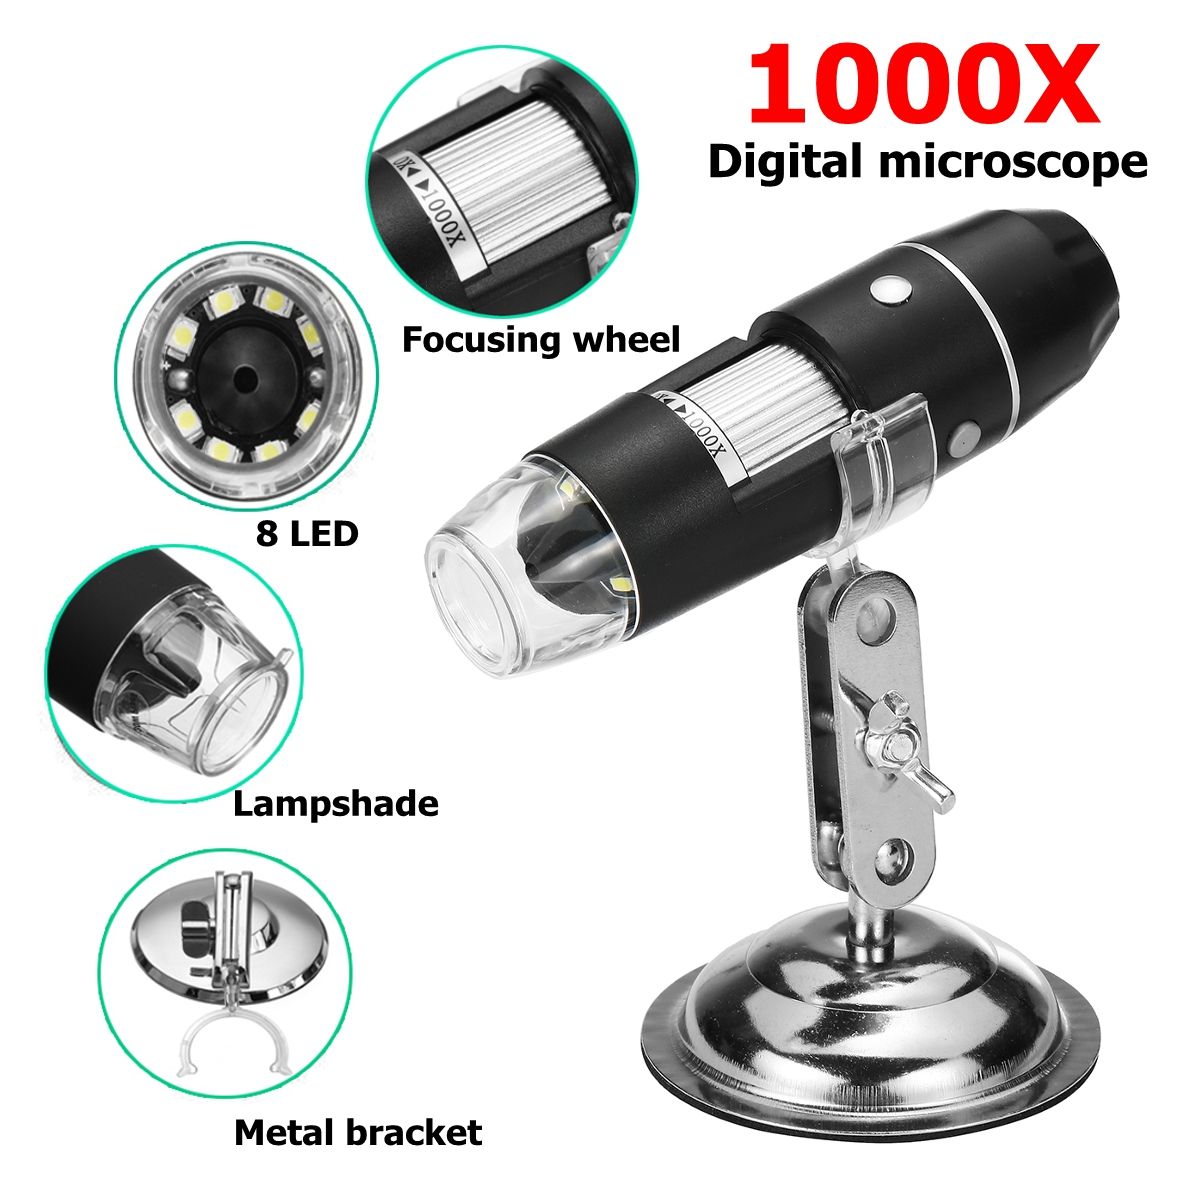 1000X-8LED-2MP-USB-Zoom-Microscope-Digital-Magnifier-HD-Endoscopic-Camera-Video-1602229